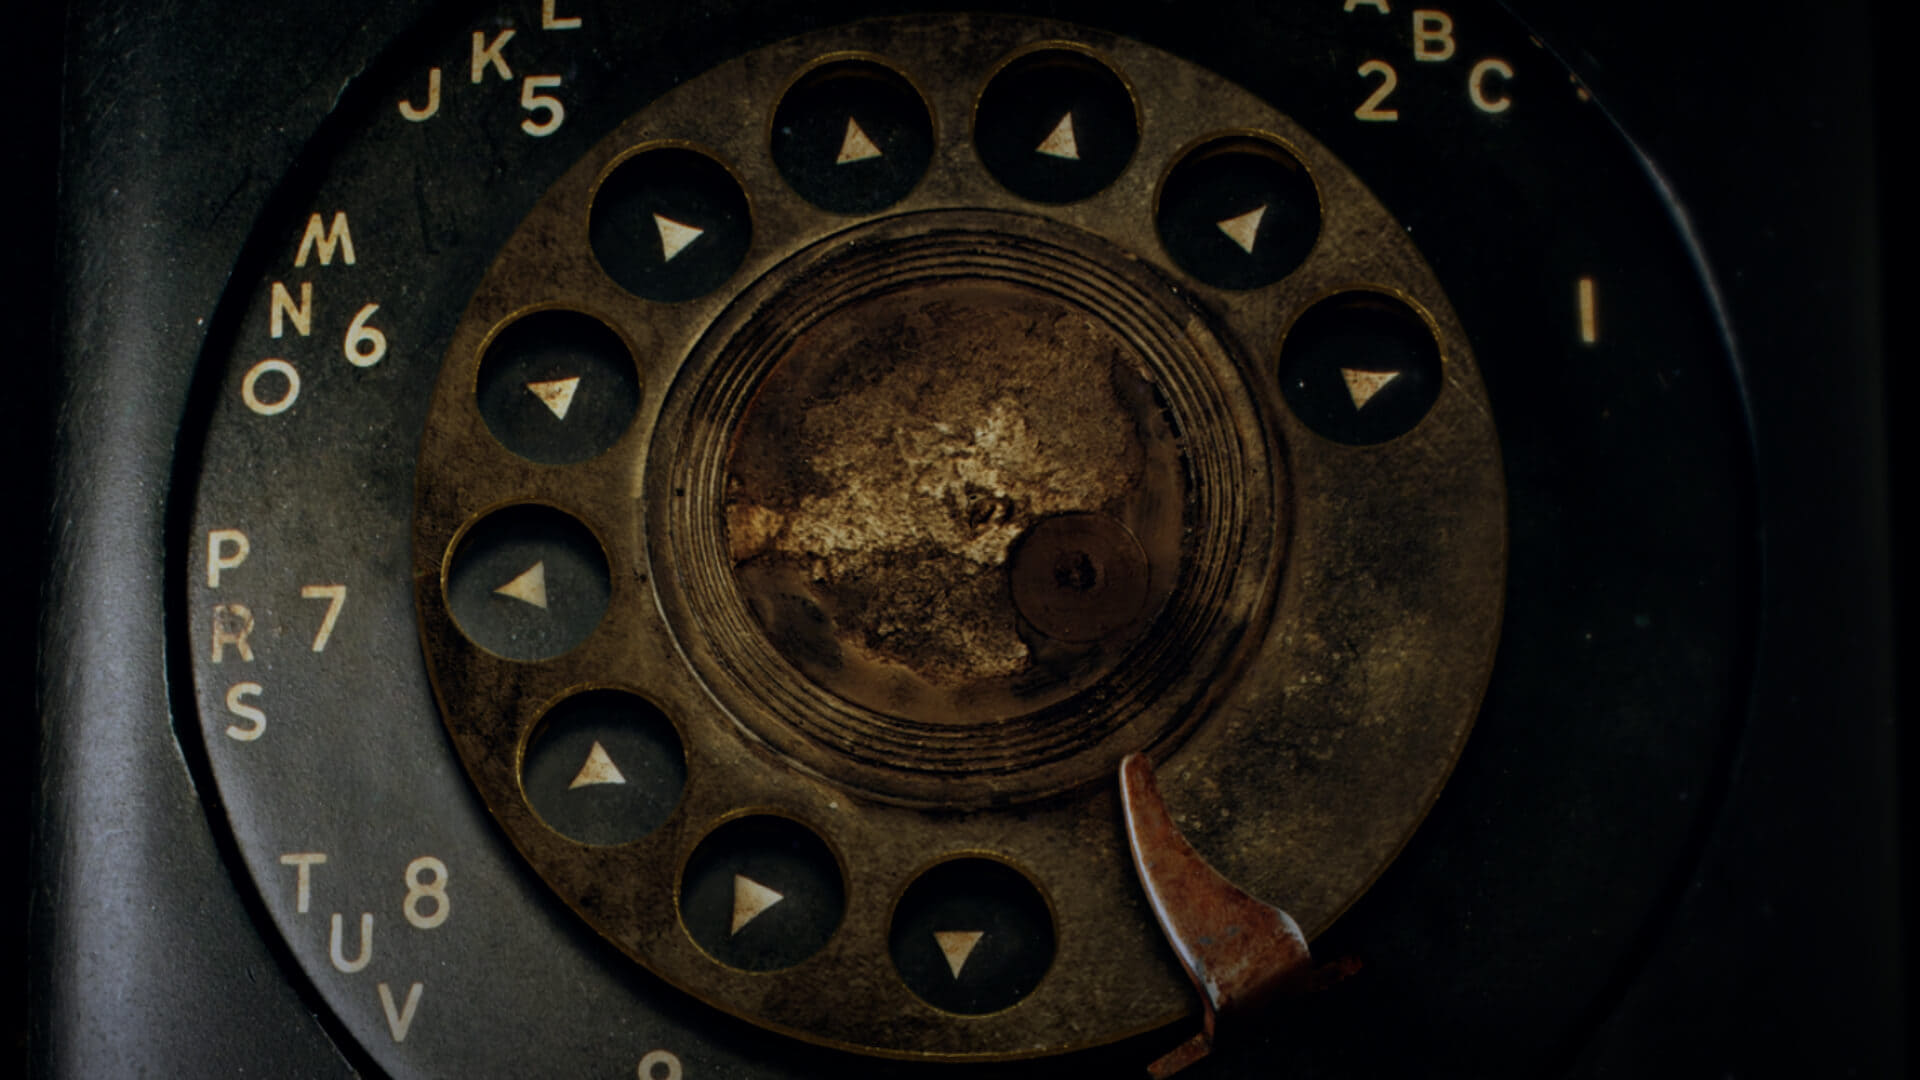 Telefonul negru (2022)